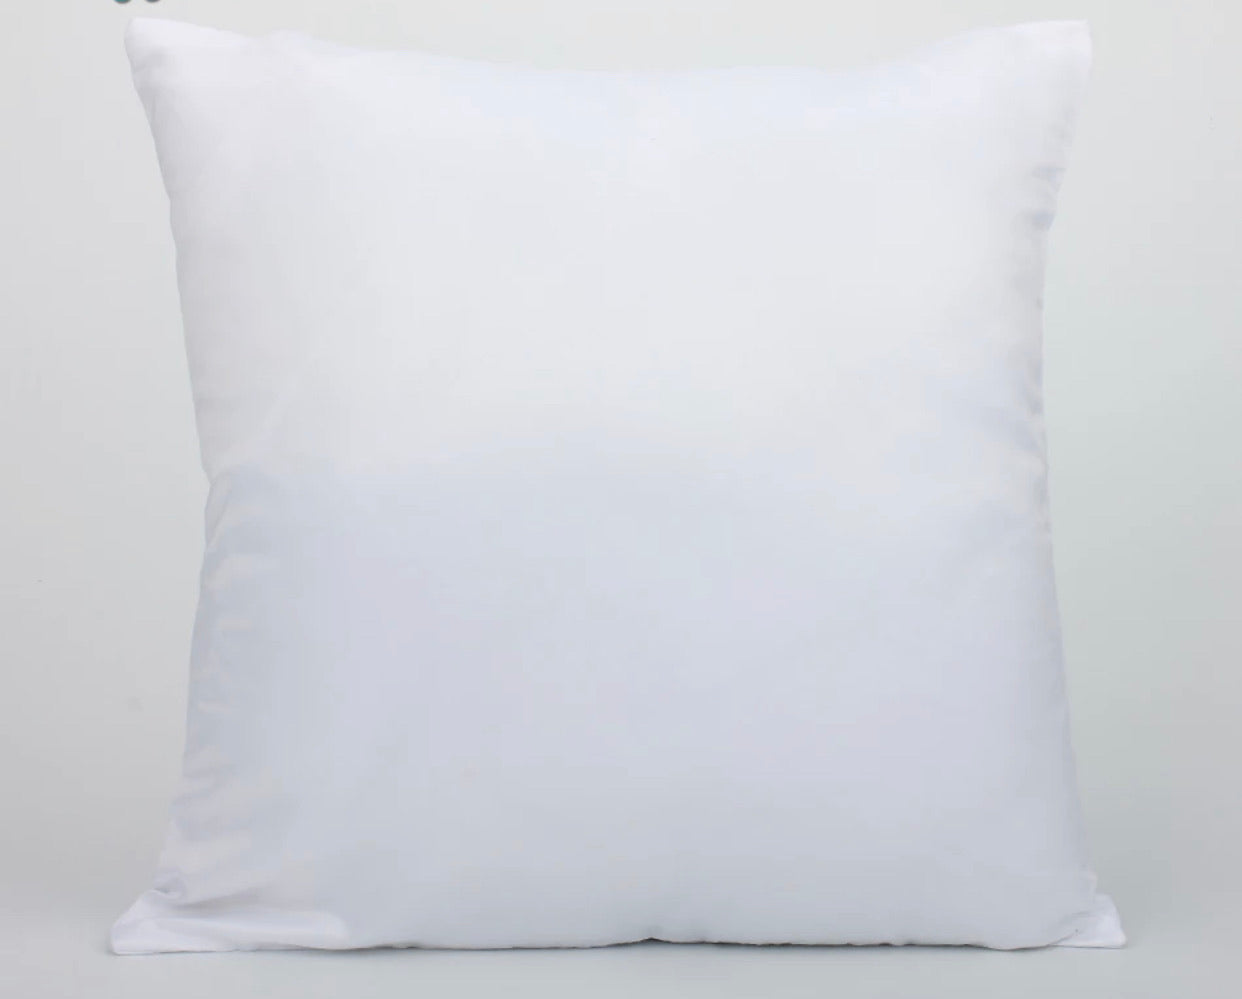 Blank White Pillow Case